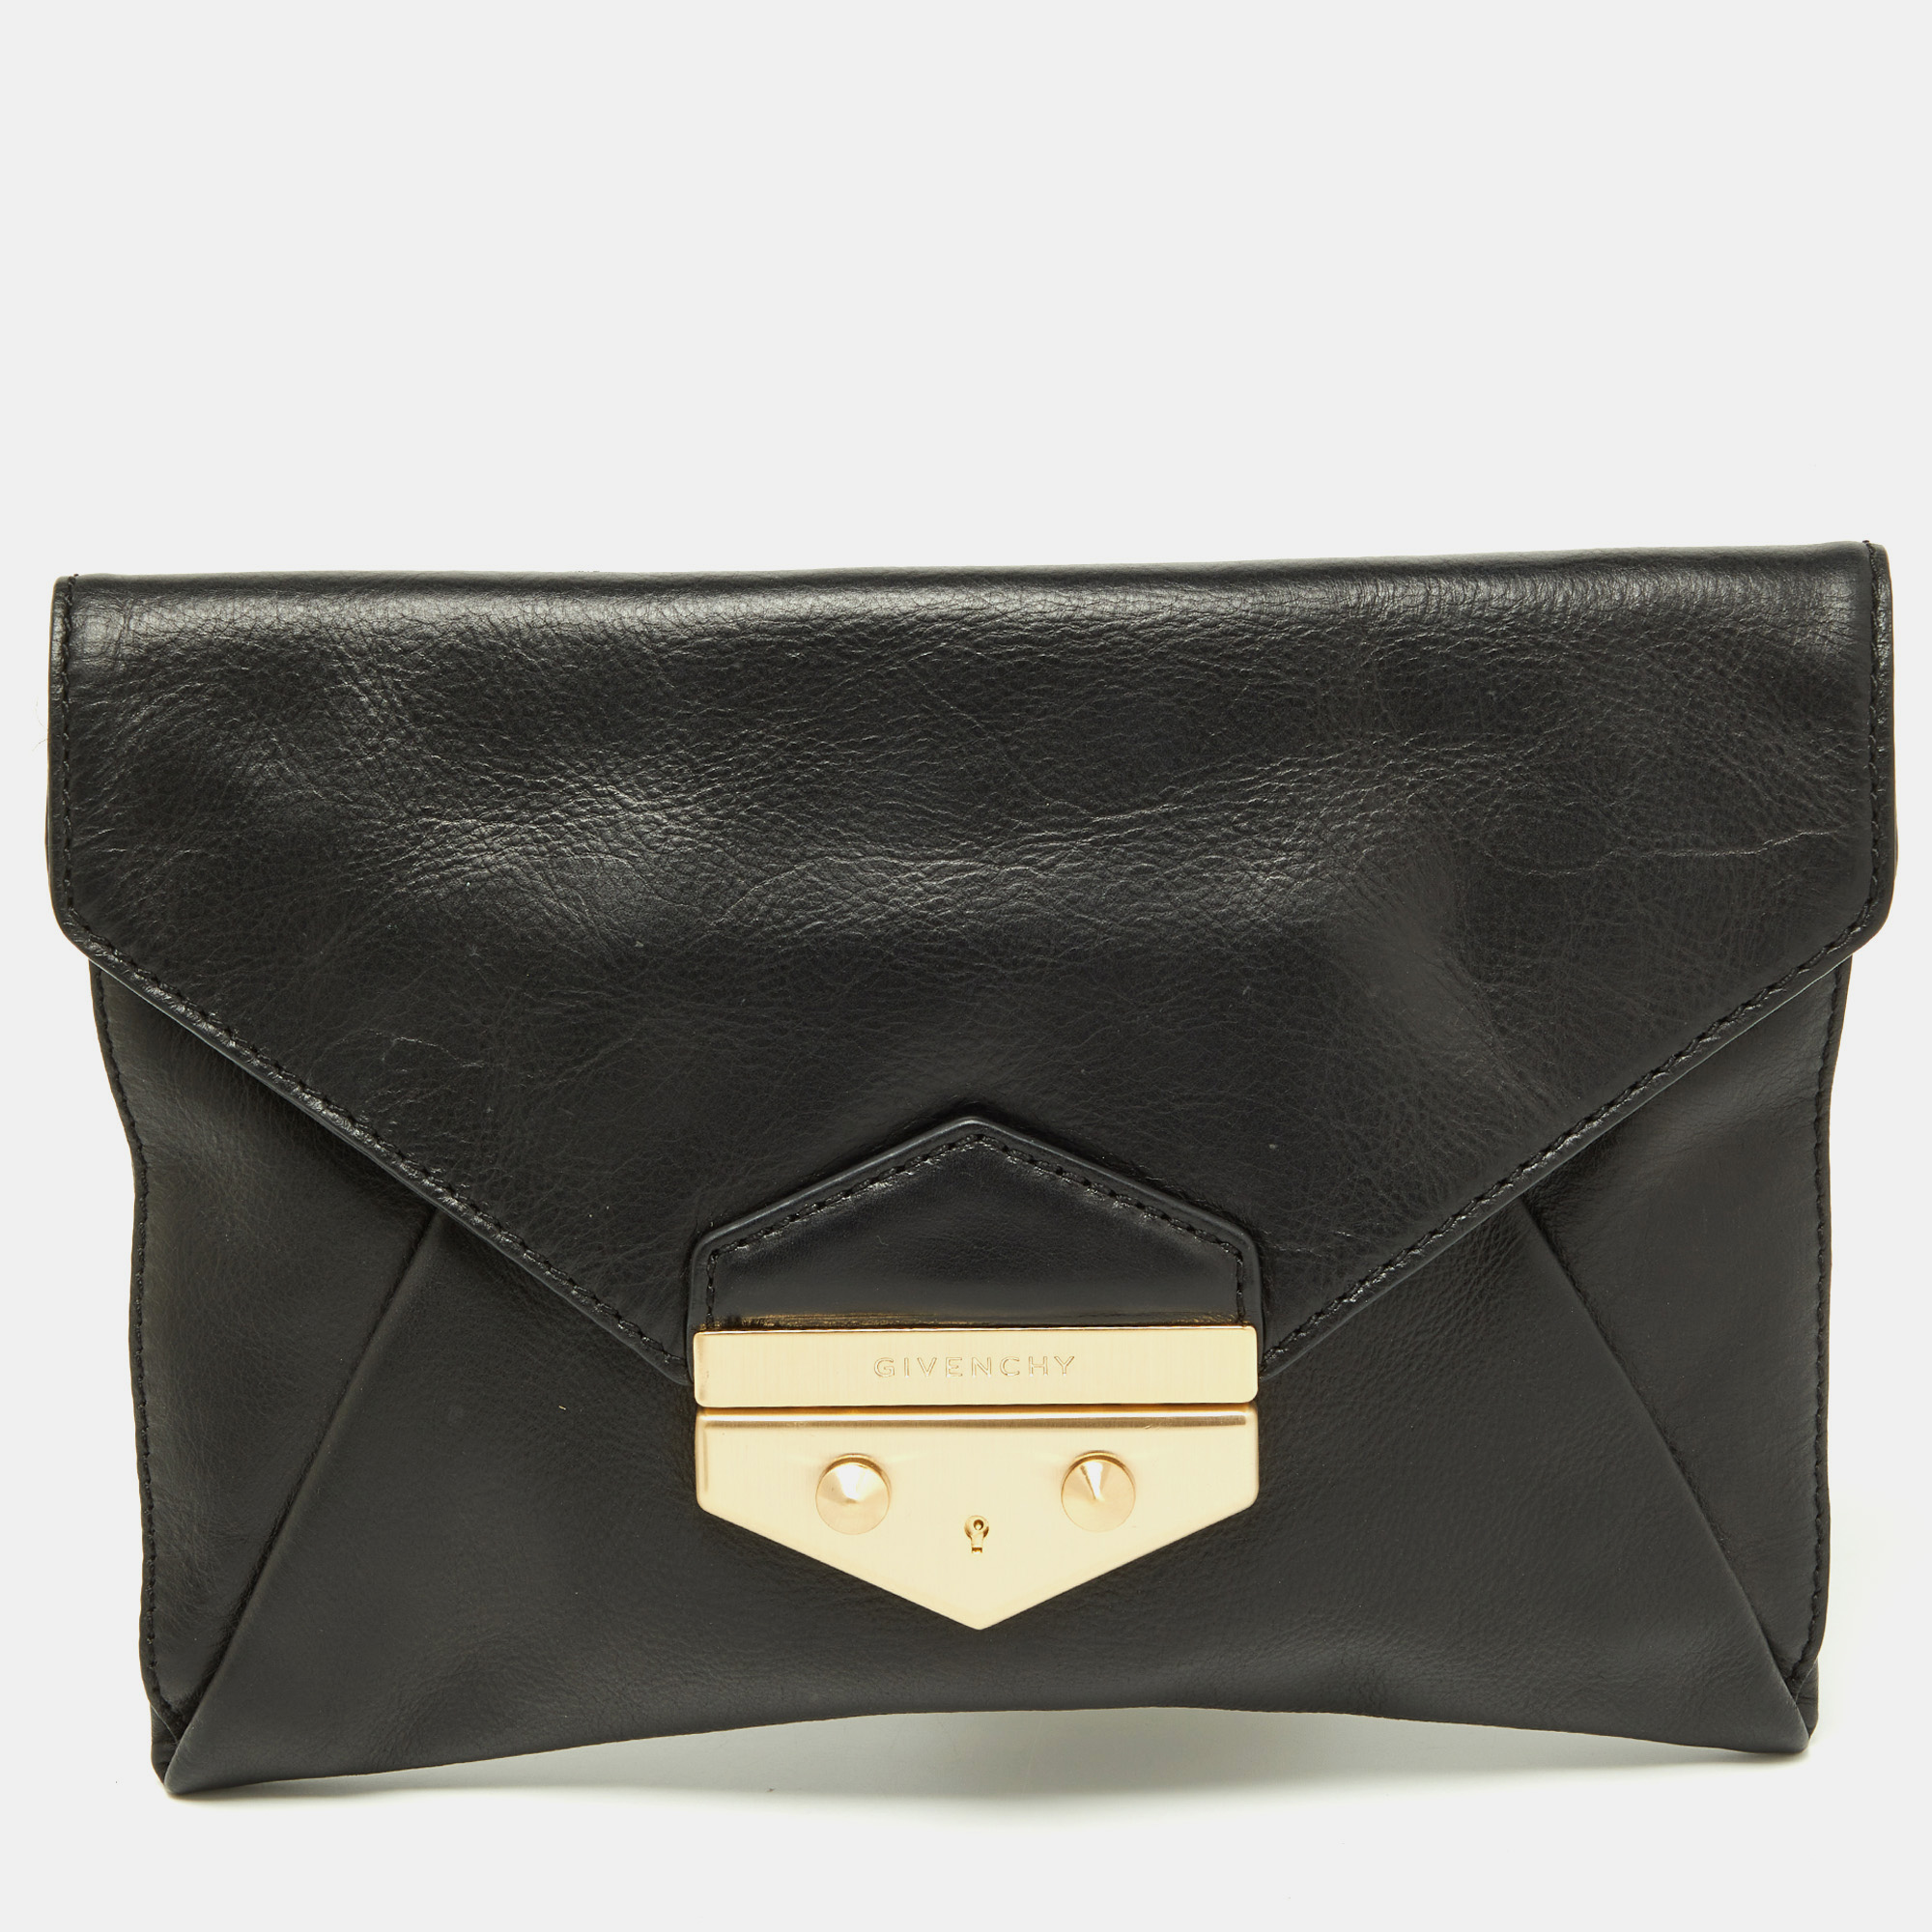 Pre-owned Givenchy Black Leather Envelope Antigona Clutch